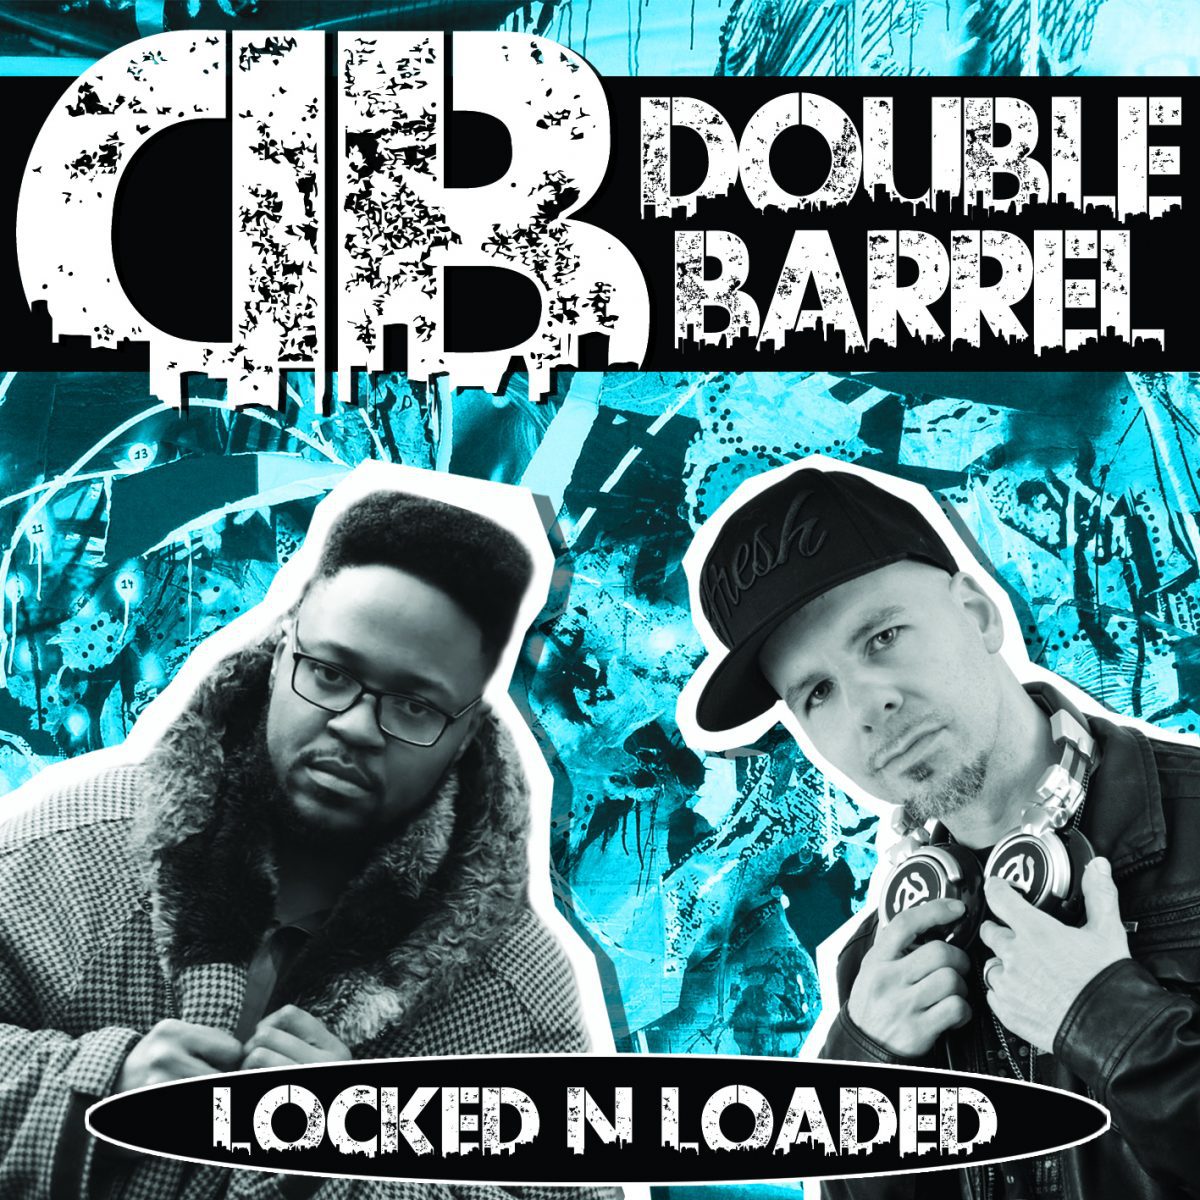 Double Barrel “locked N Loaded” Album Review